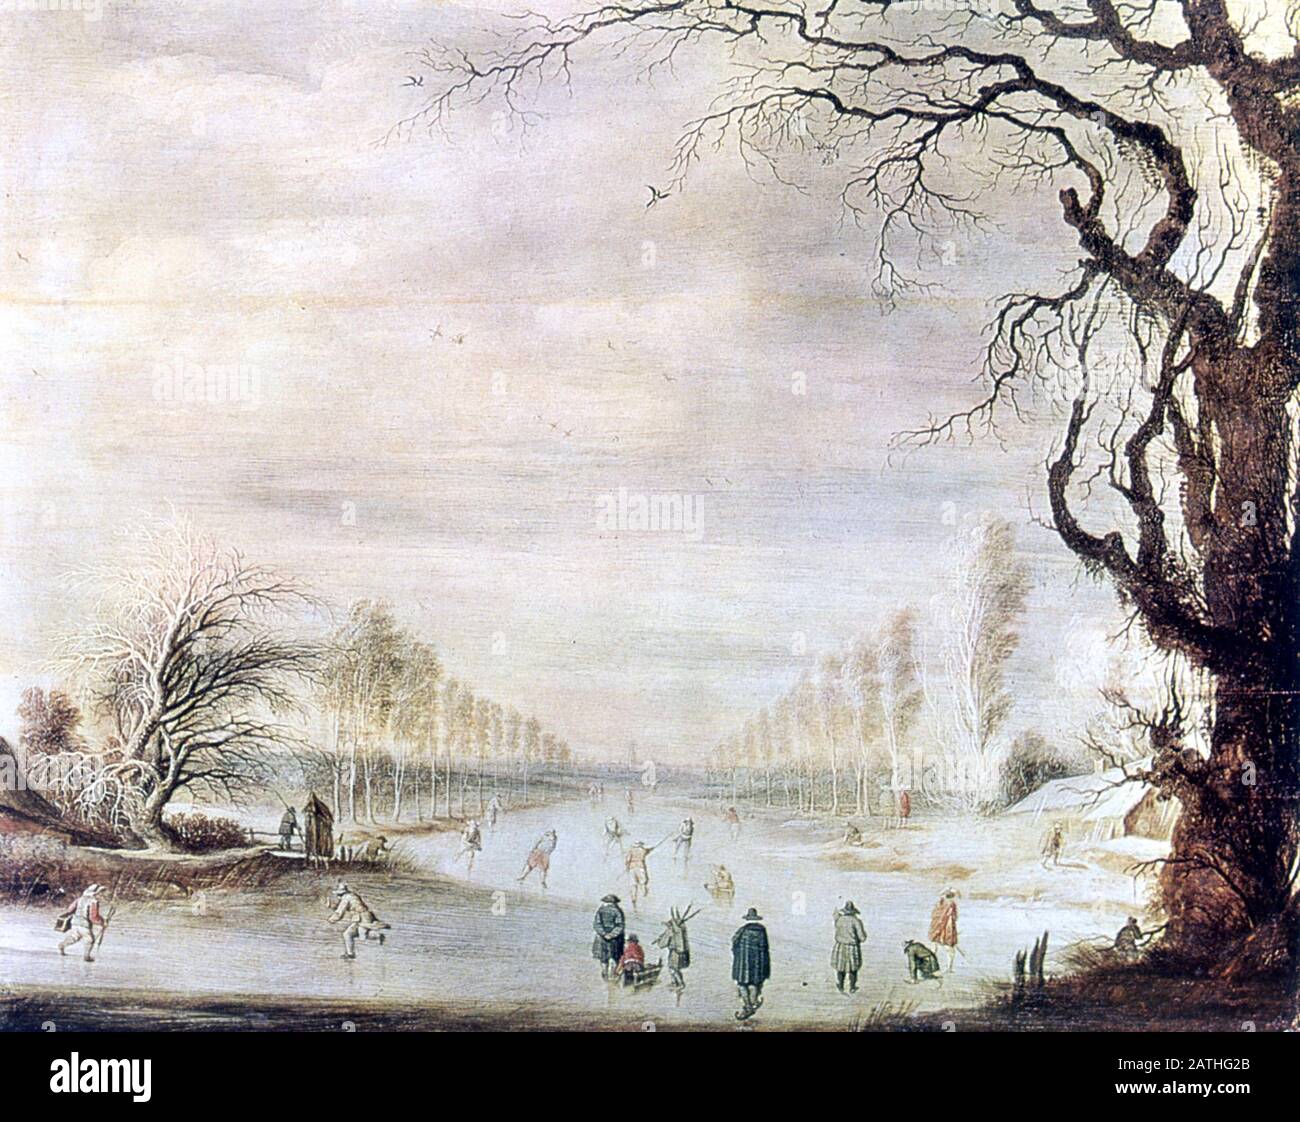 Gijsbrecht Lijttens Flemish school A Winter Landscape with Ice Skaters Oil on panel (71.5 x 89 cm) St Petersburg, Hermitage Museum Stock Photo